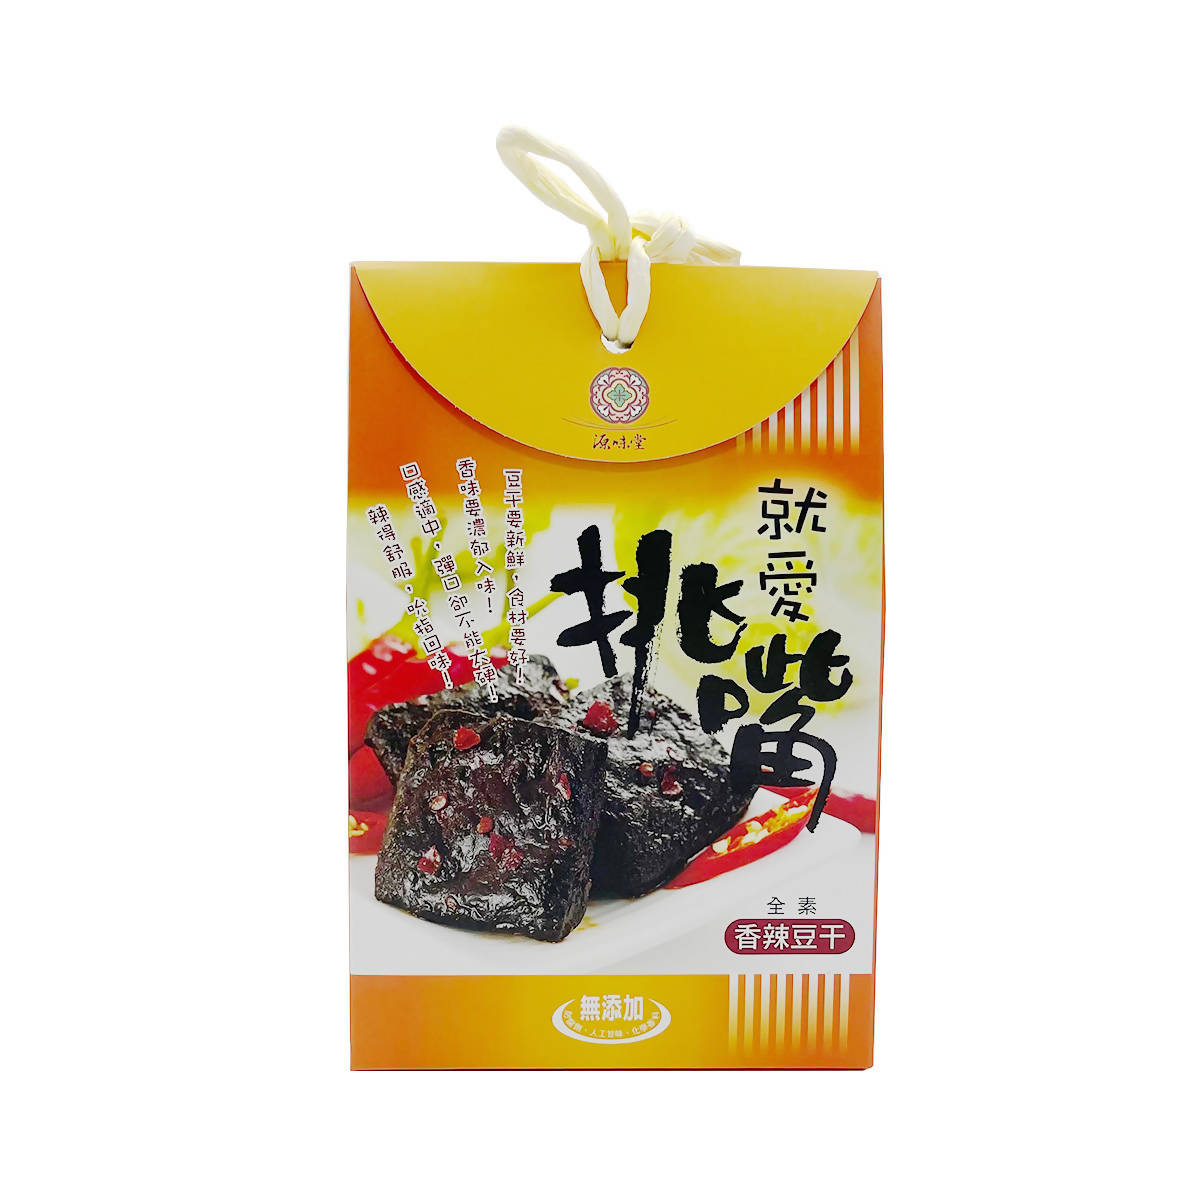 [Taiwan Direct Mail] Taiwan Songji SUNG CHI Spicy Dried Tofu 200g(Expiration Date: 2022/11/18) 